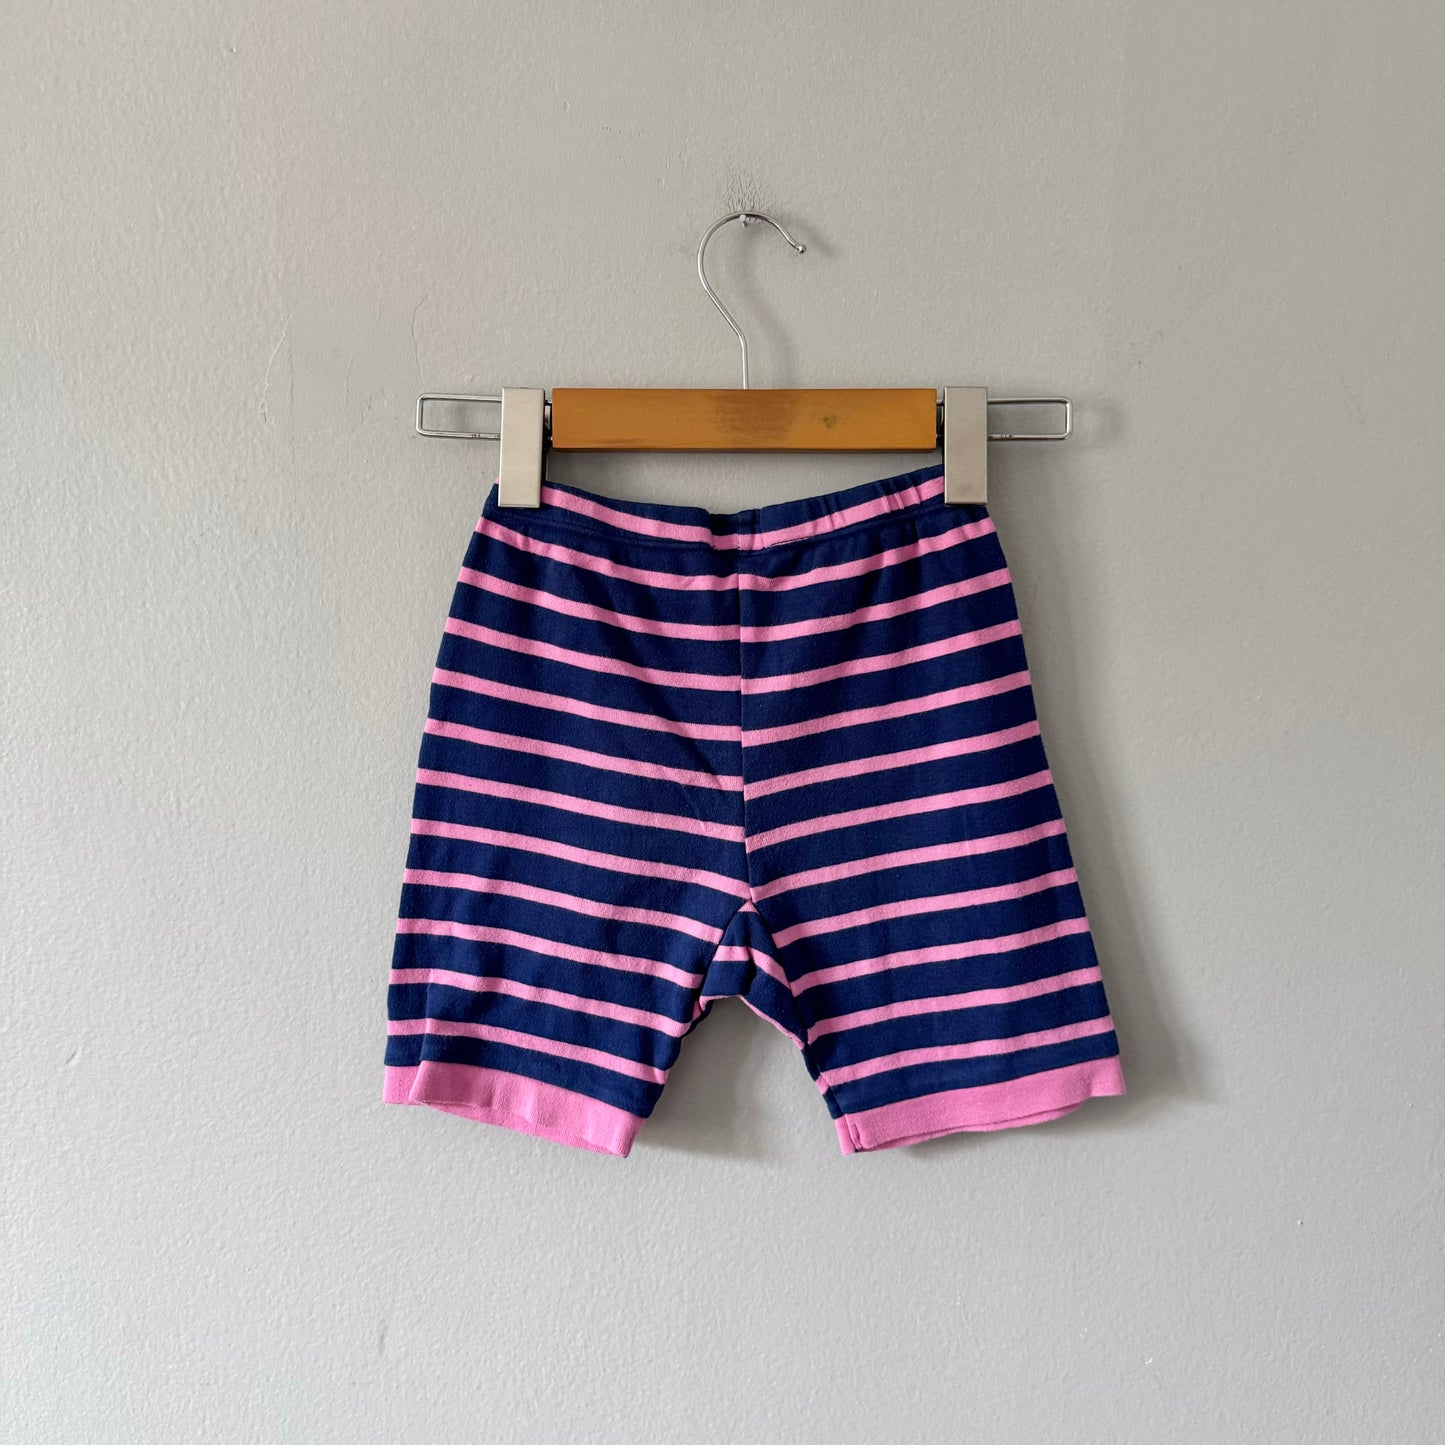 Hatley / Striped short pants / 7Y